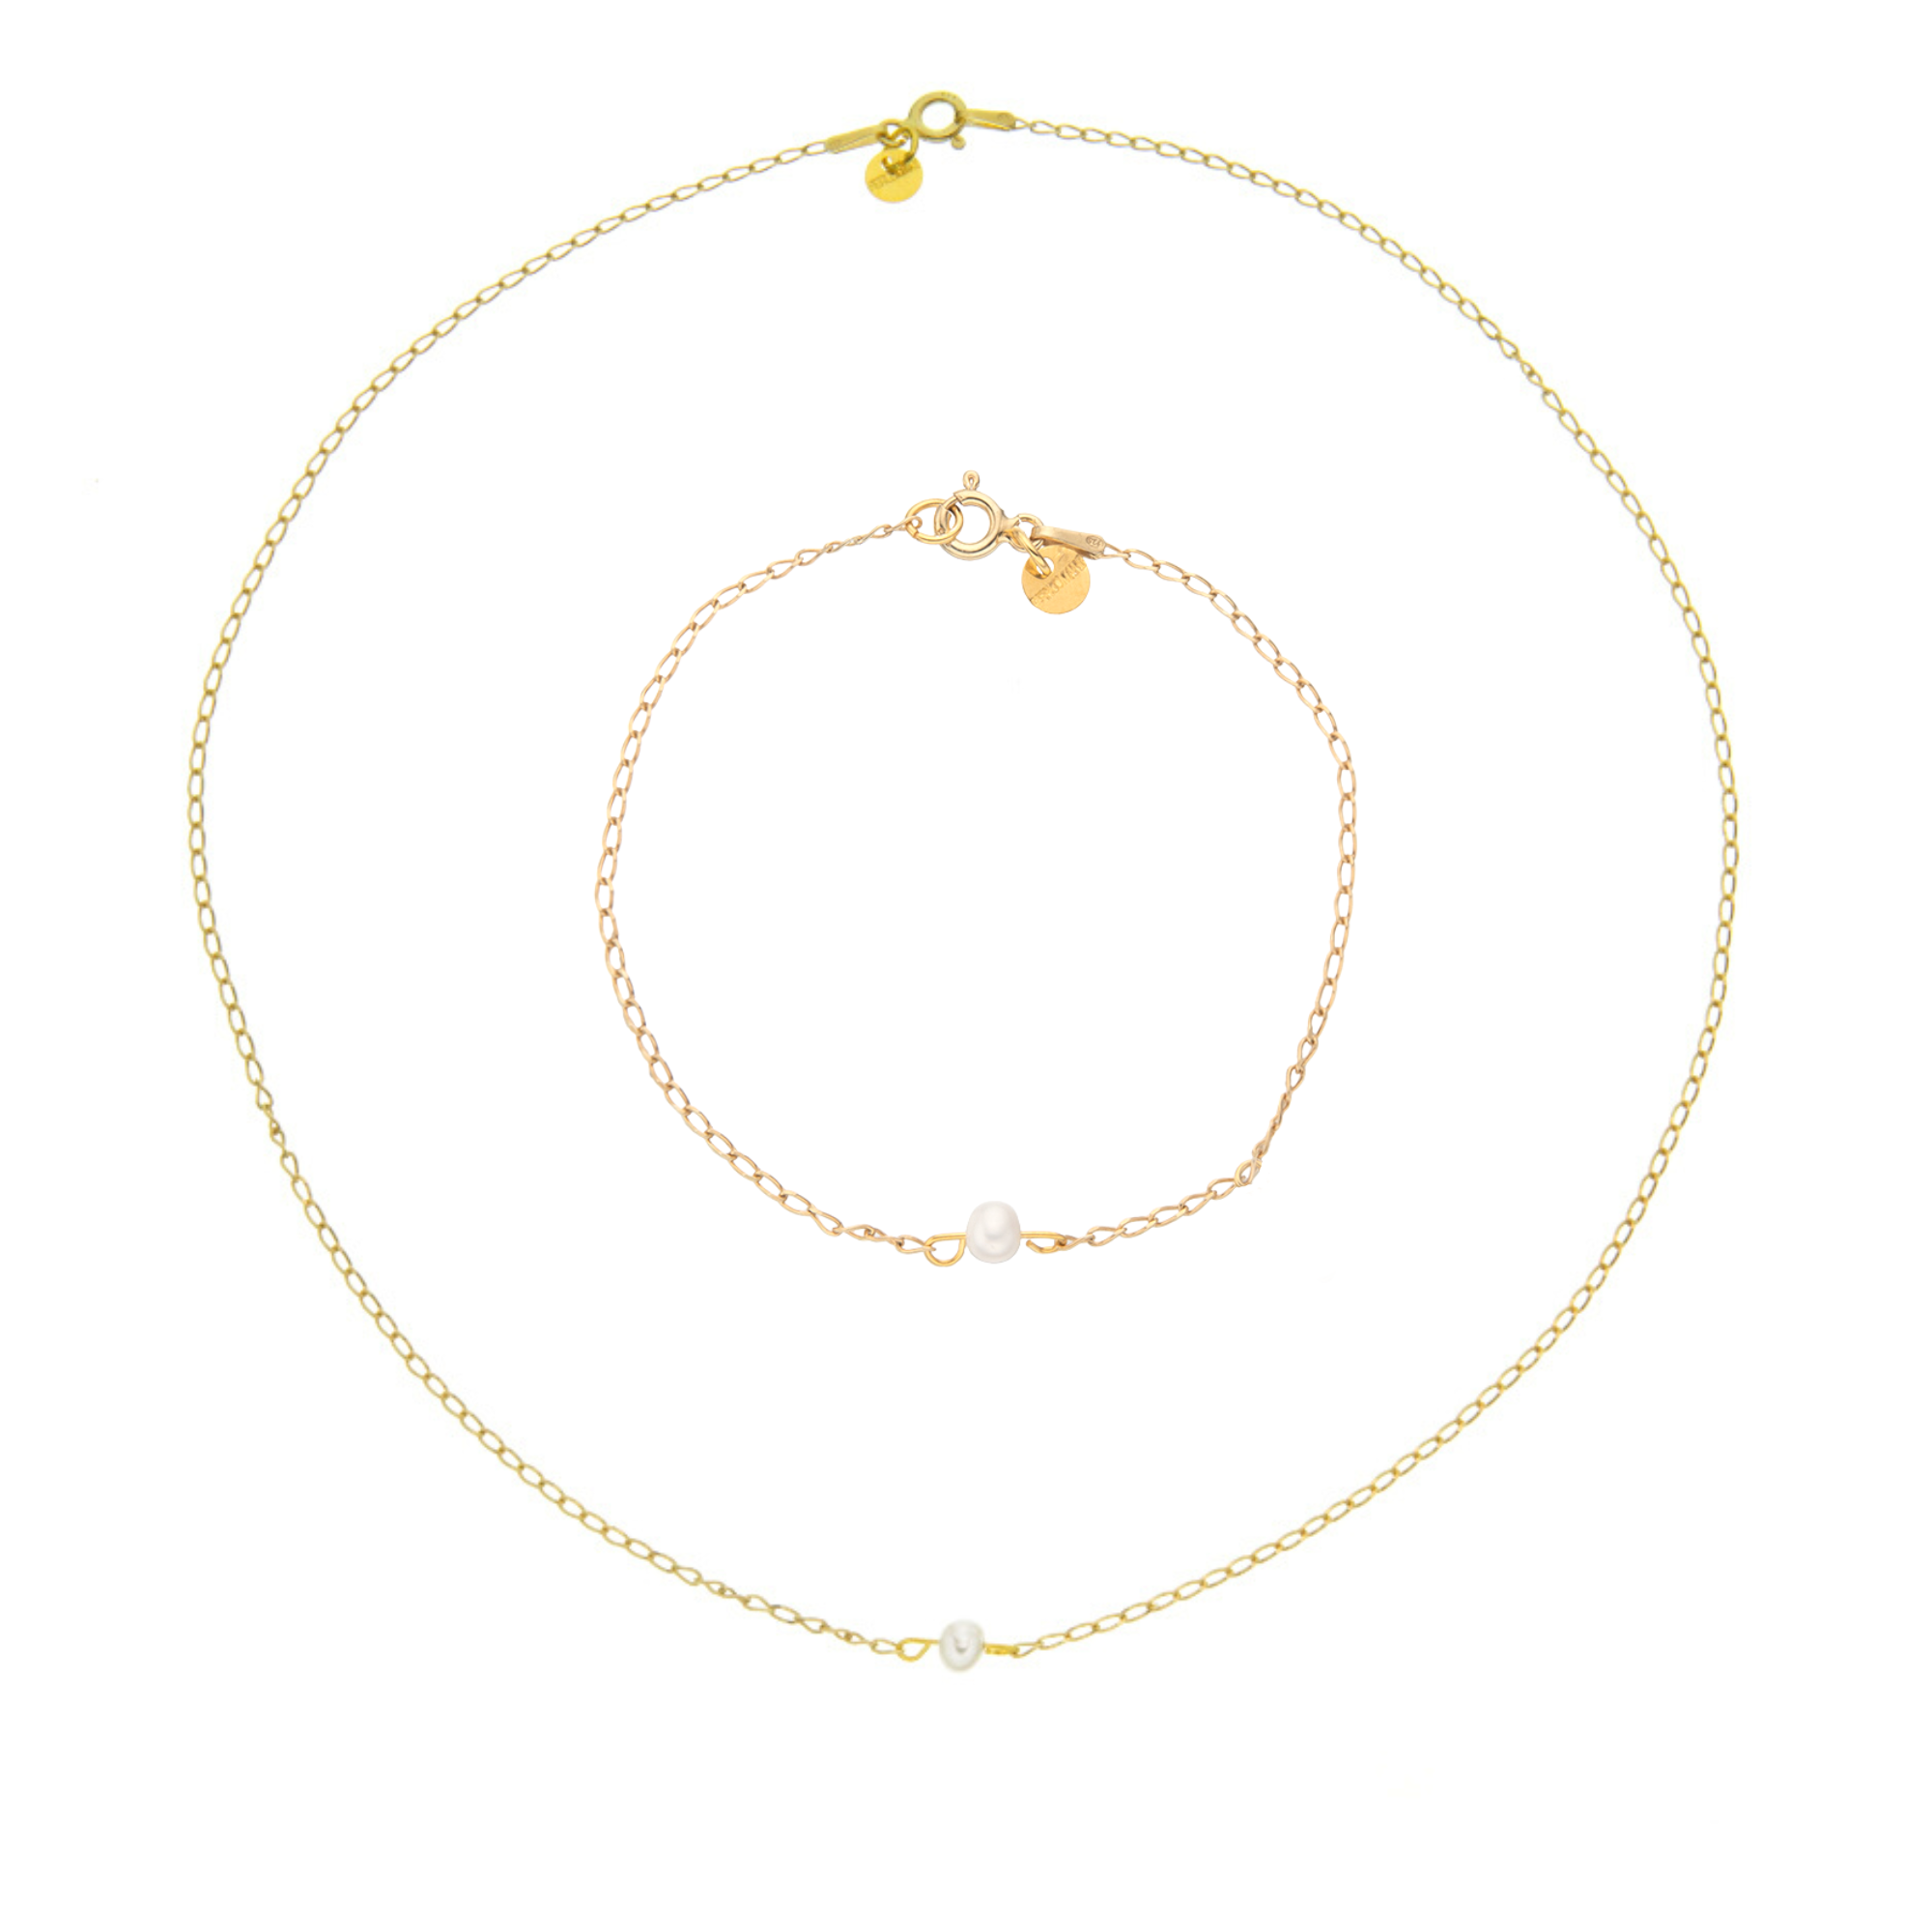 Souprava stříbrných šperků Unique, minimalistický náhrdelník s bílou perlou a minimalistický náramek s bílou perlou, zlacené stříbrno, Perlomanie